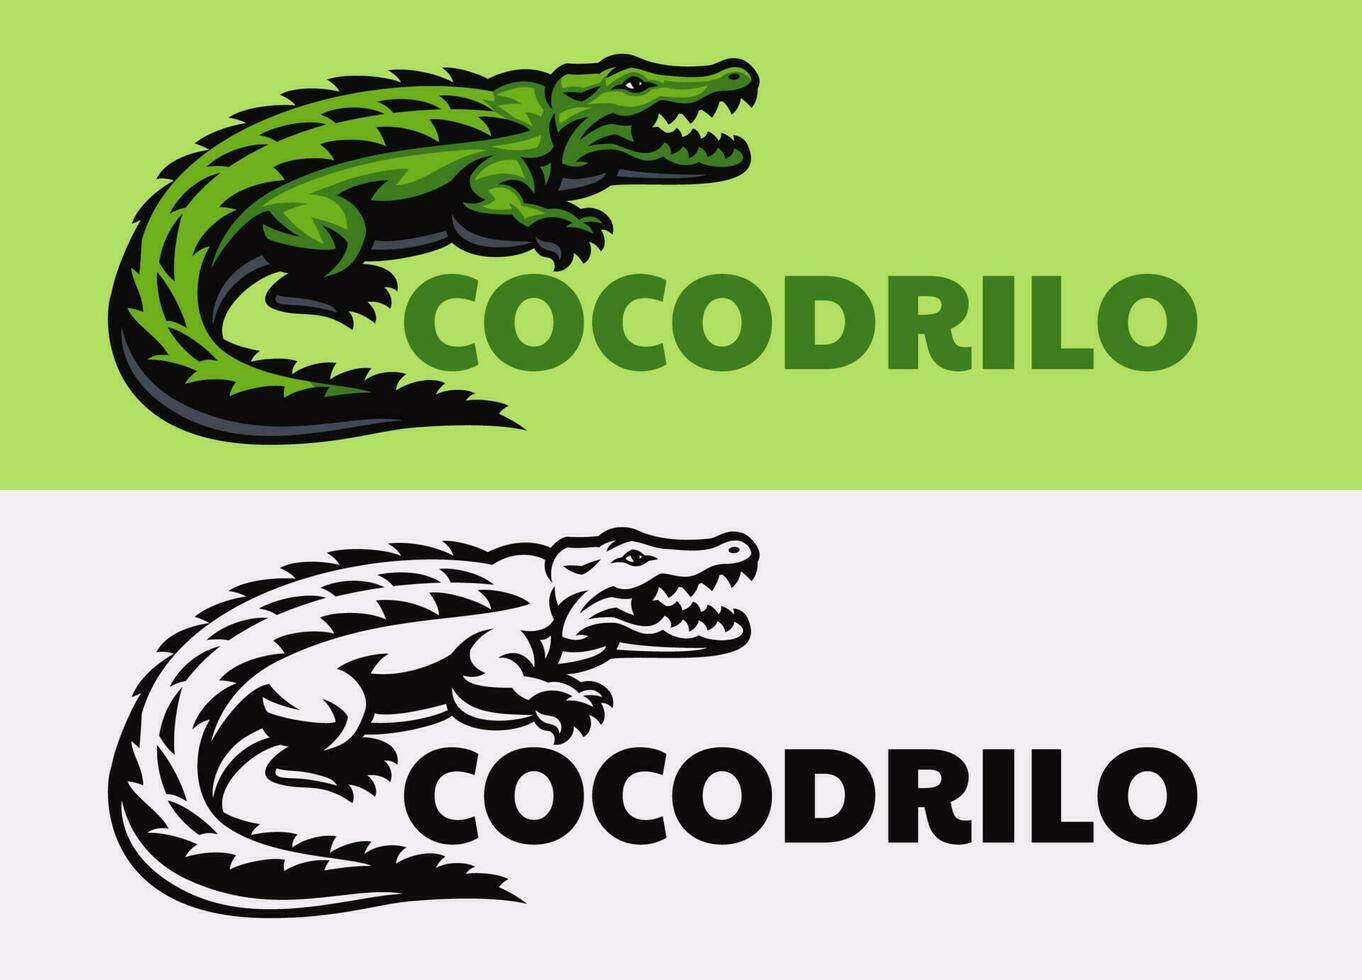 doppelt Logo von Grün Krokodil vektor